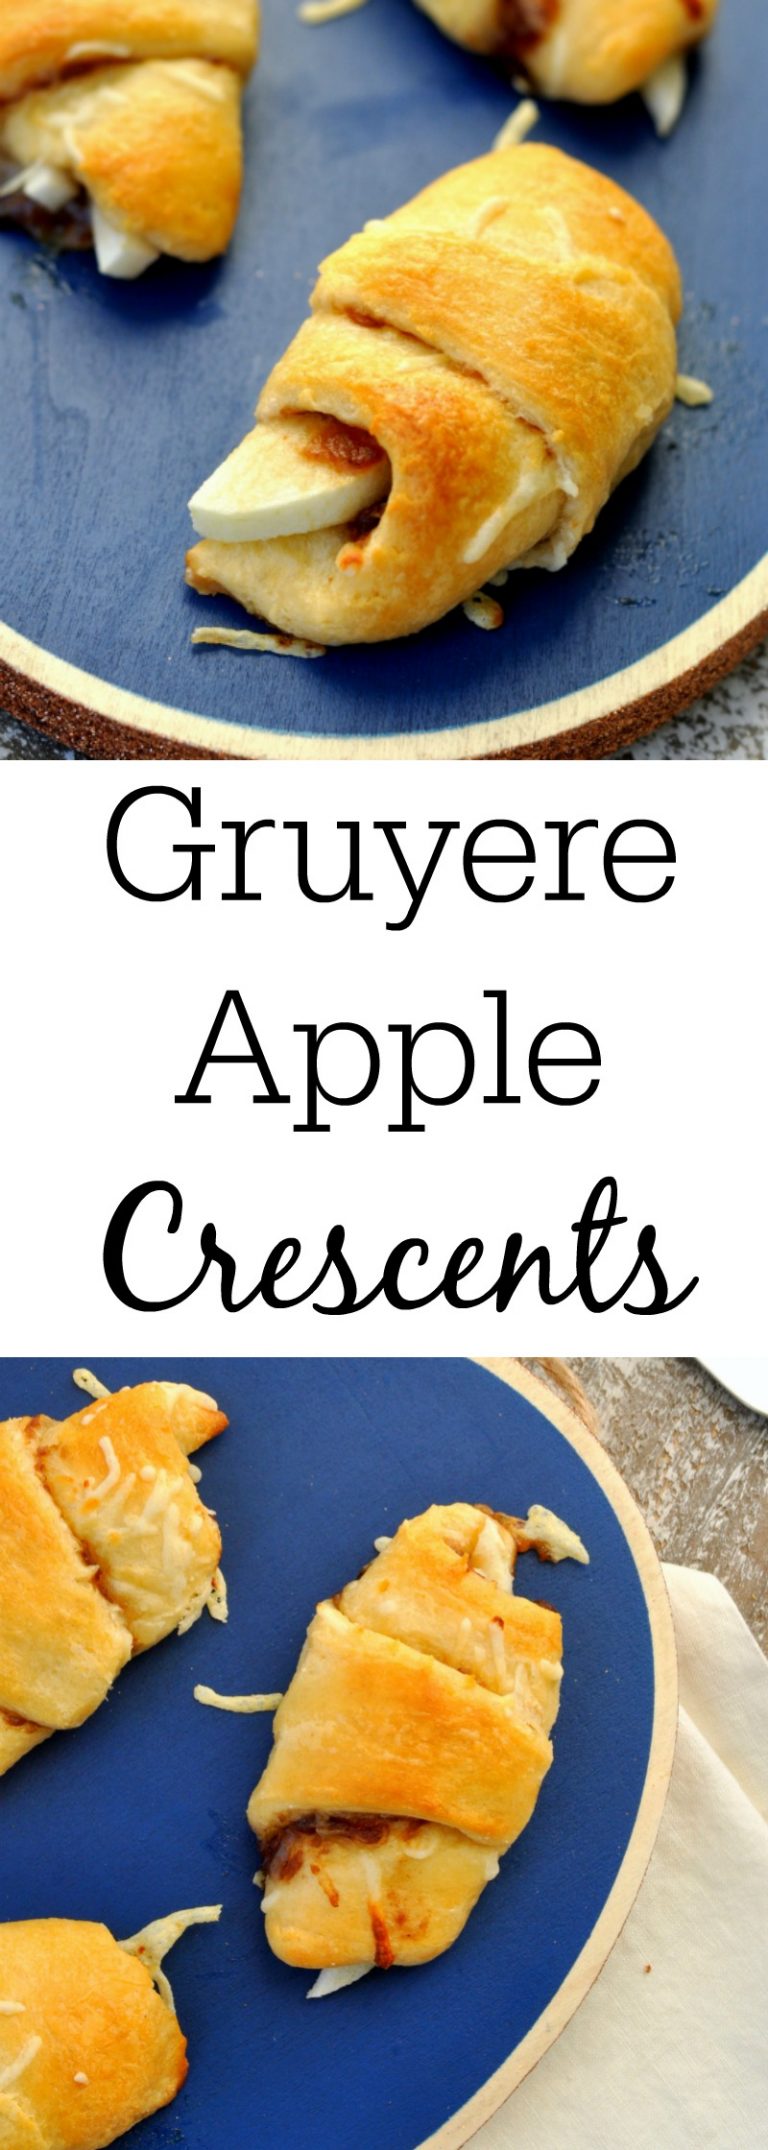 Gruyere Apple Butter Crescents - An Amazing Cresent Roll Appetizer